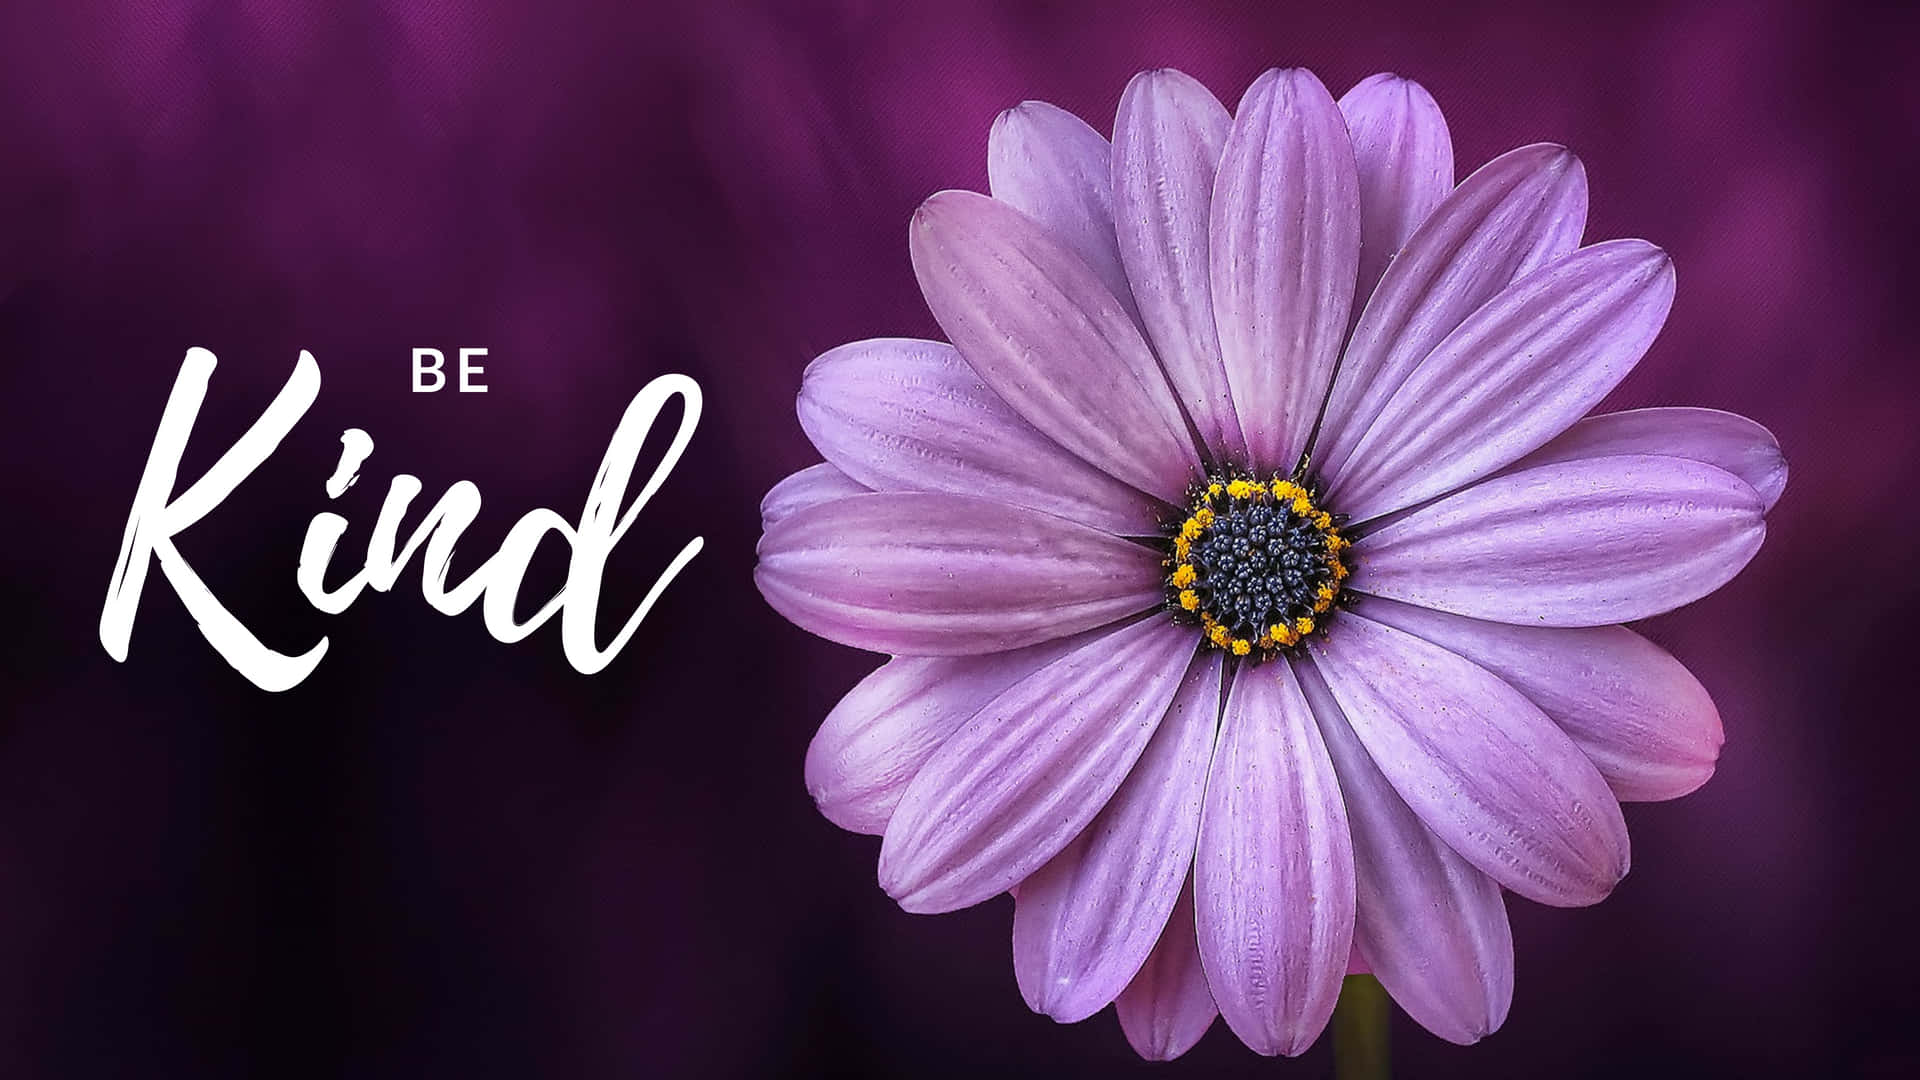 Kindness Purple Flower Picture